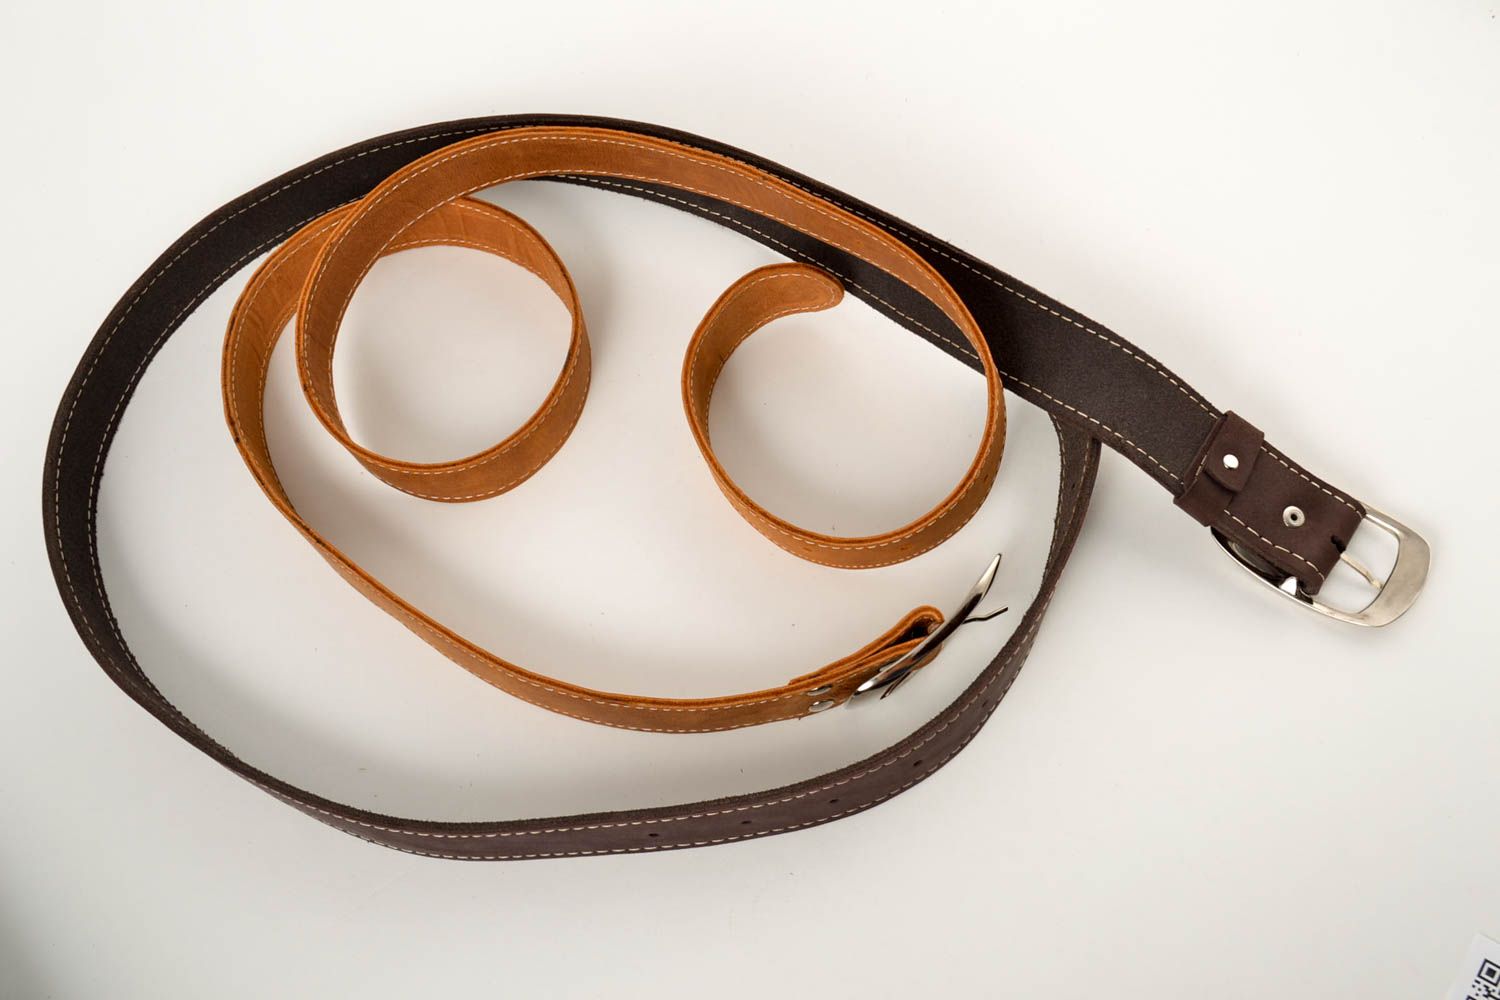 Handmade leather belts 2 designer belts for men leather goods gift for boyfriend photo 5